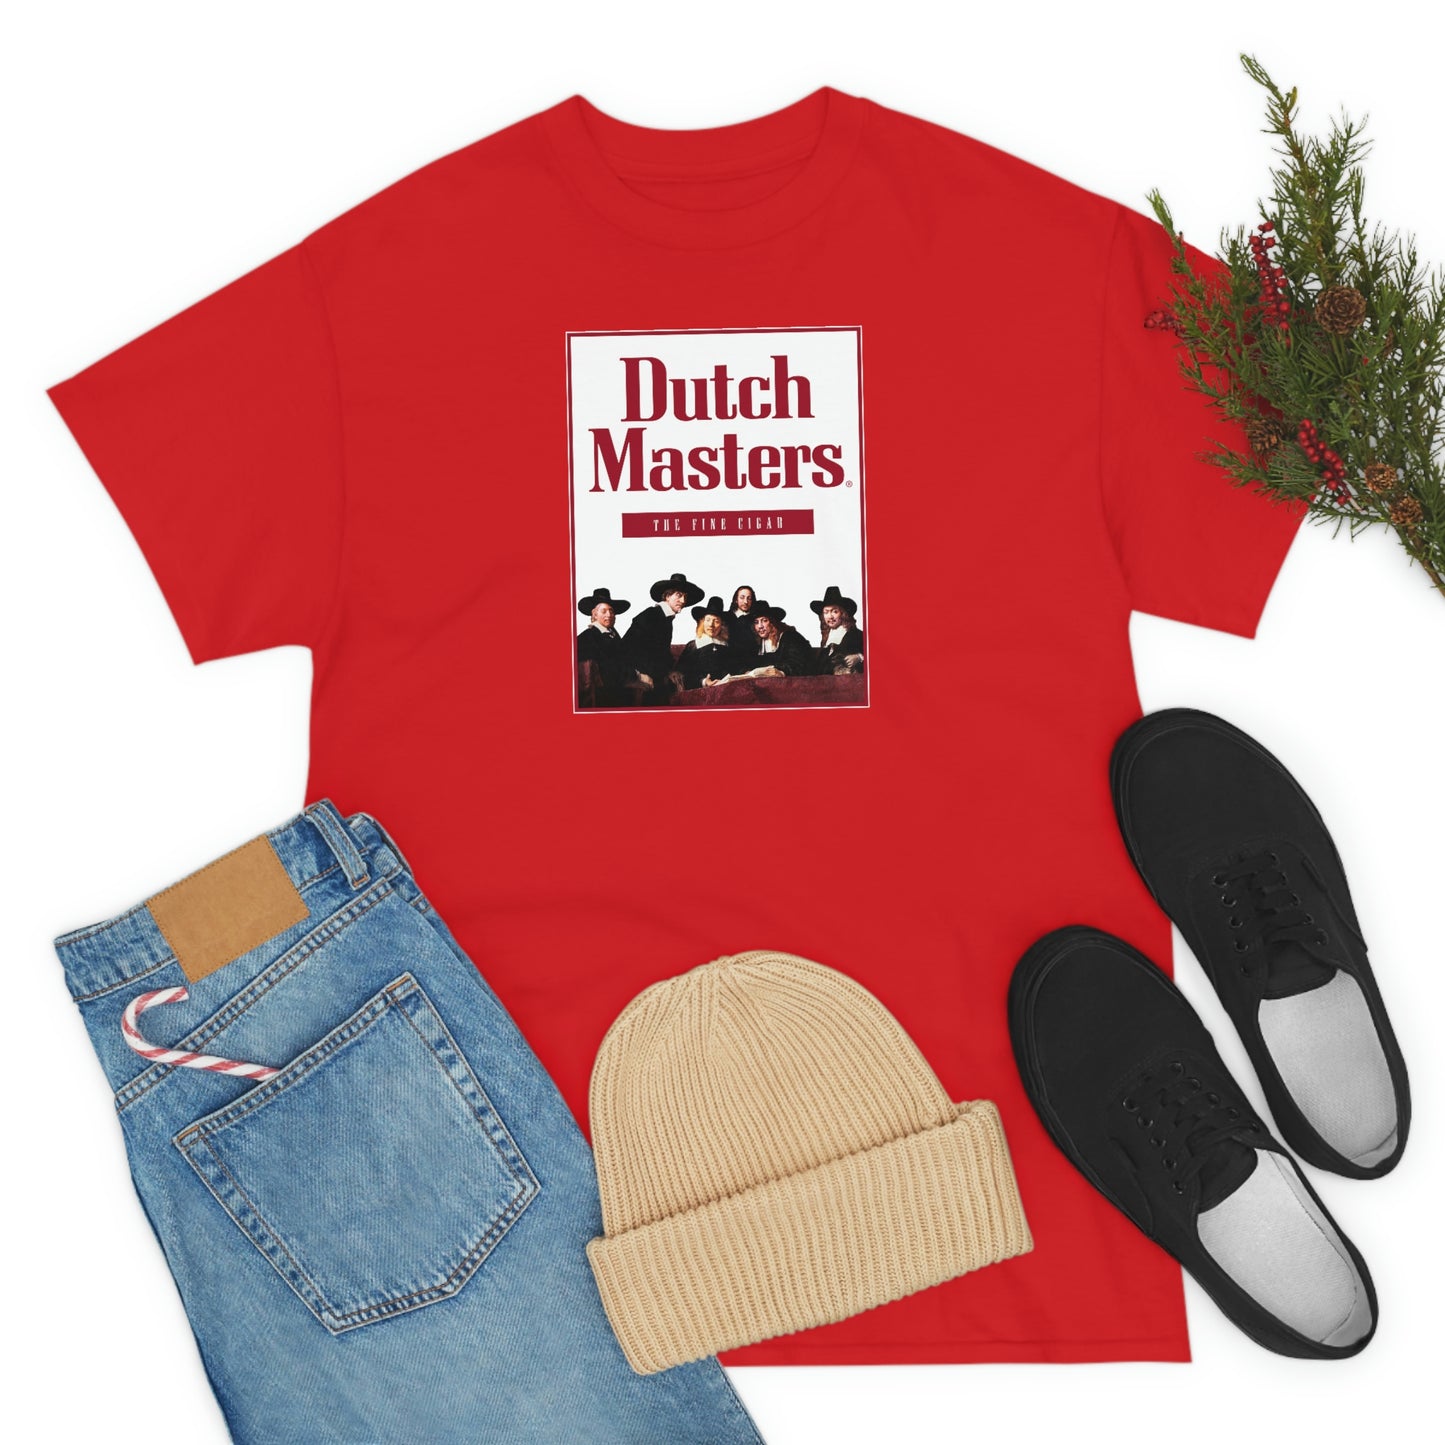 Dutch Masters T-Shirt